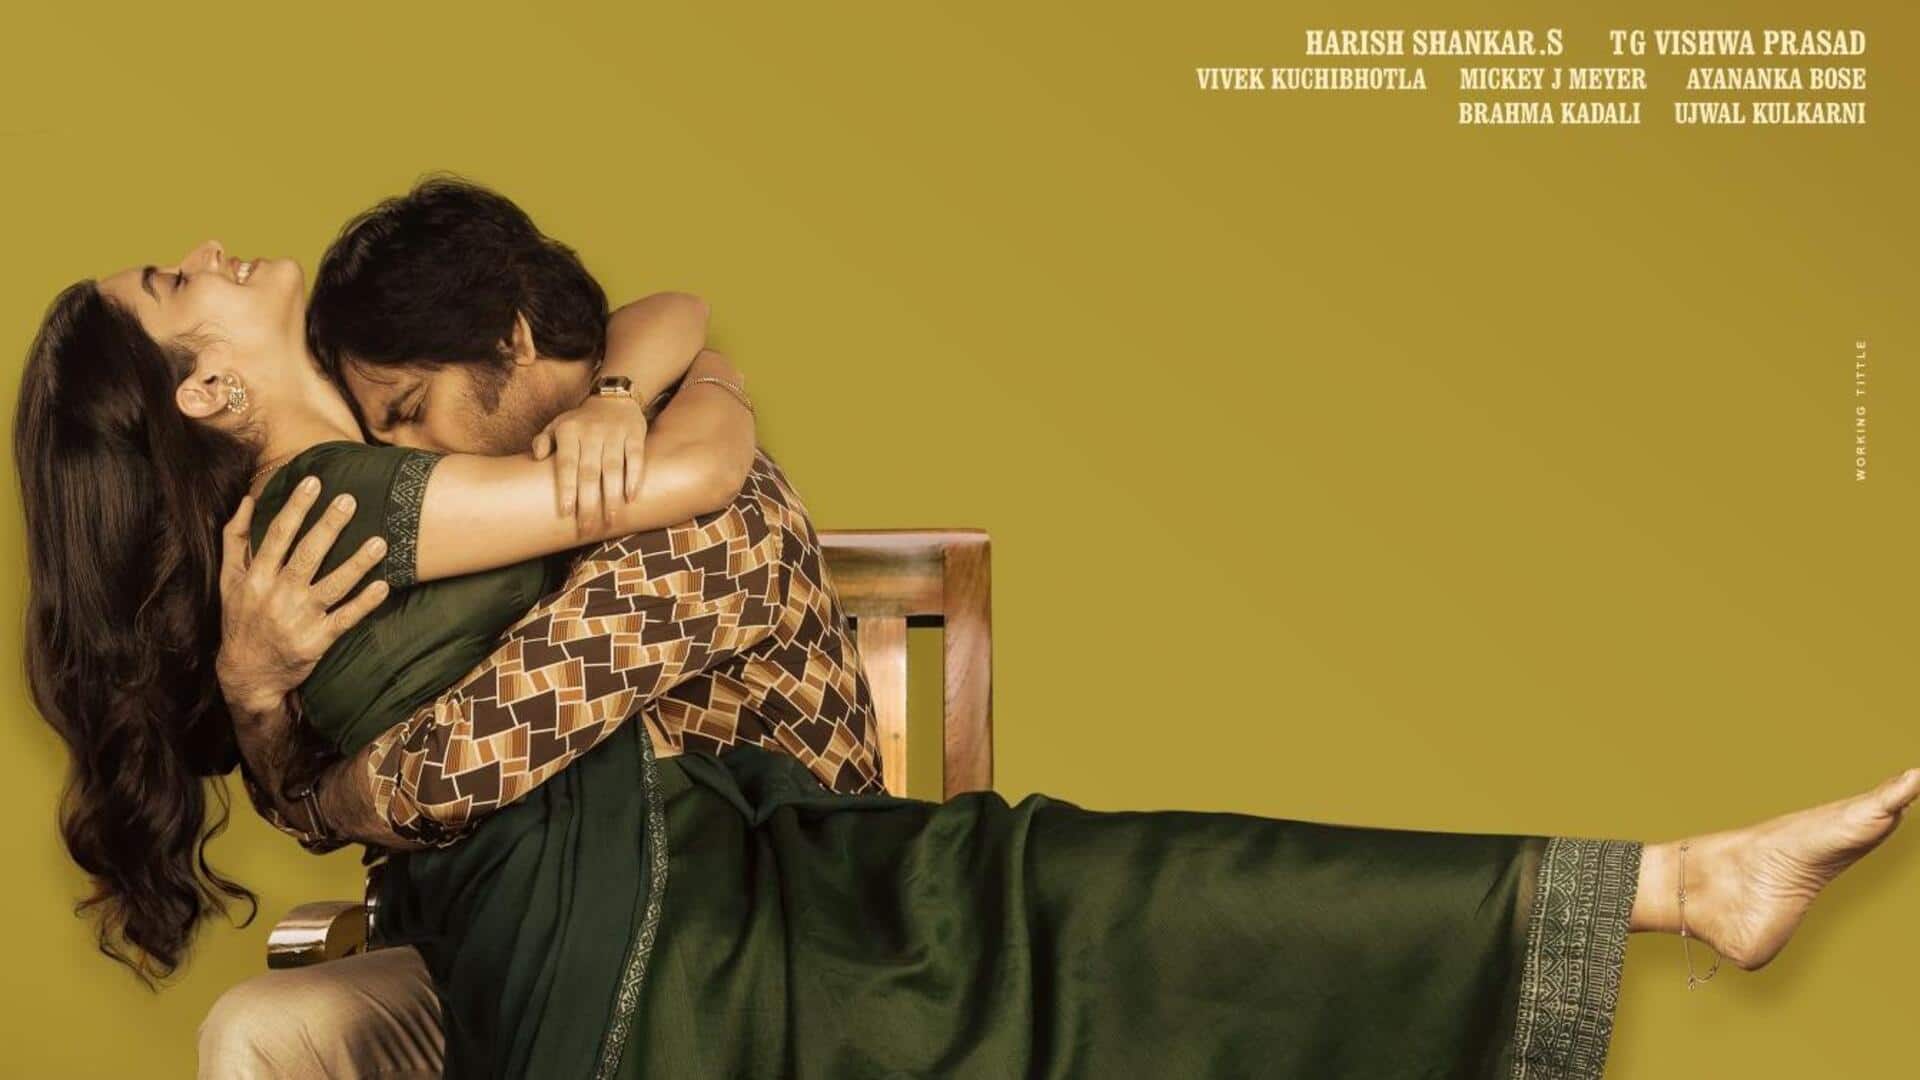 'Mr Bachchan': Ravi Teja drops steamy poster featuring Bhagyashri Borse